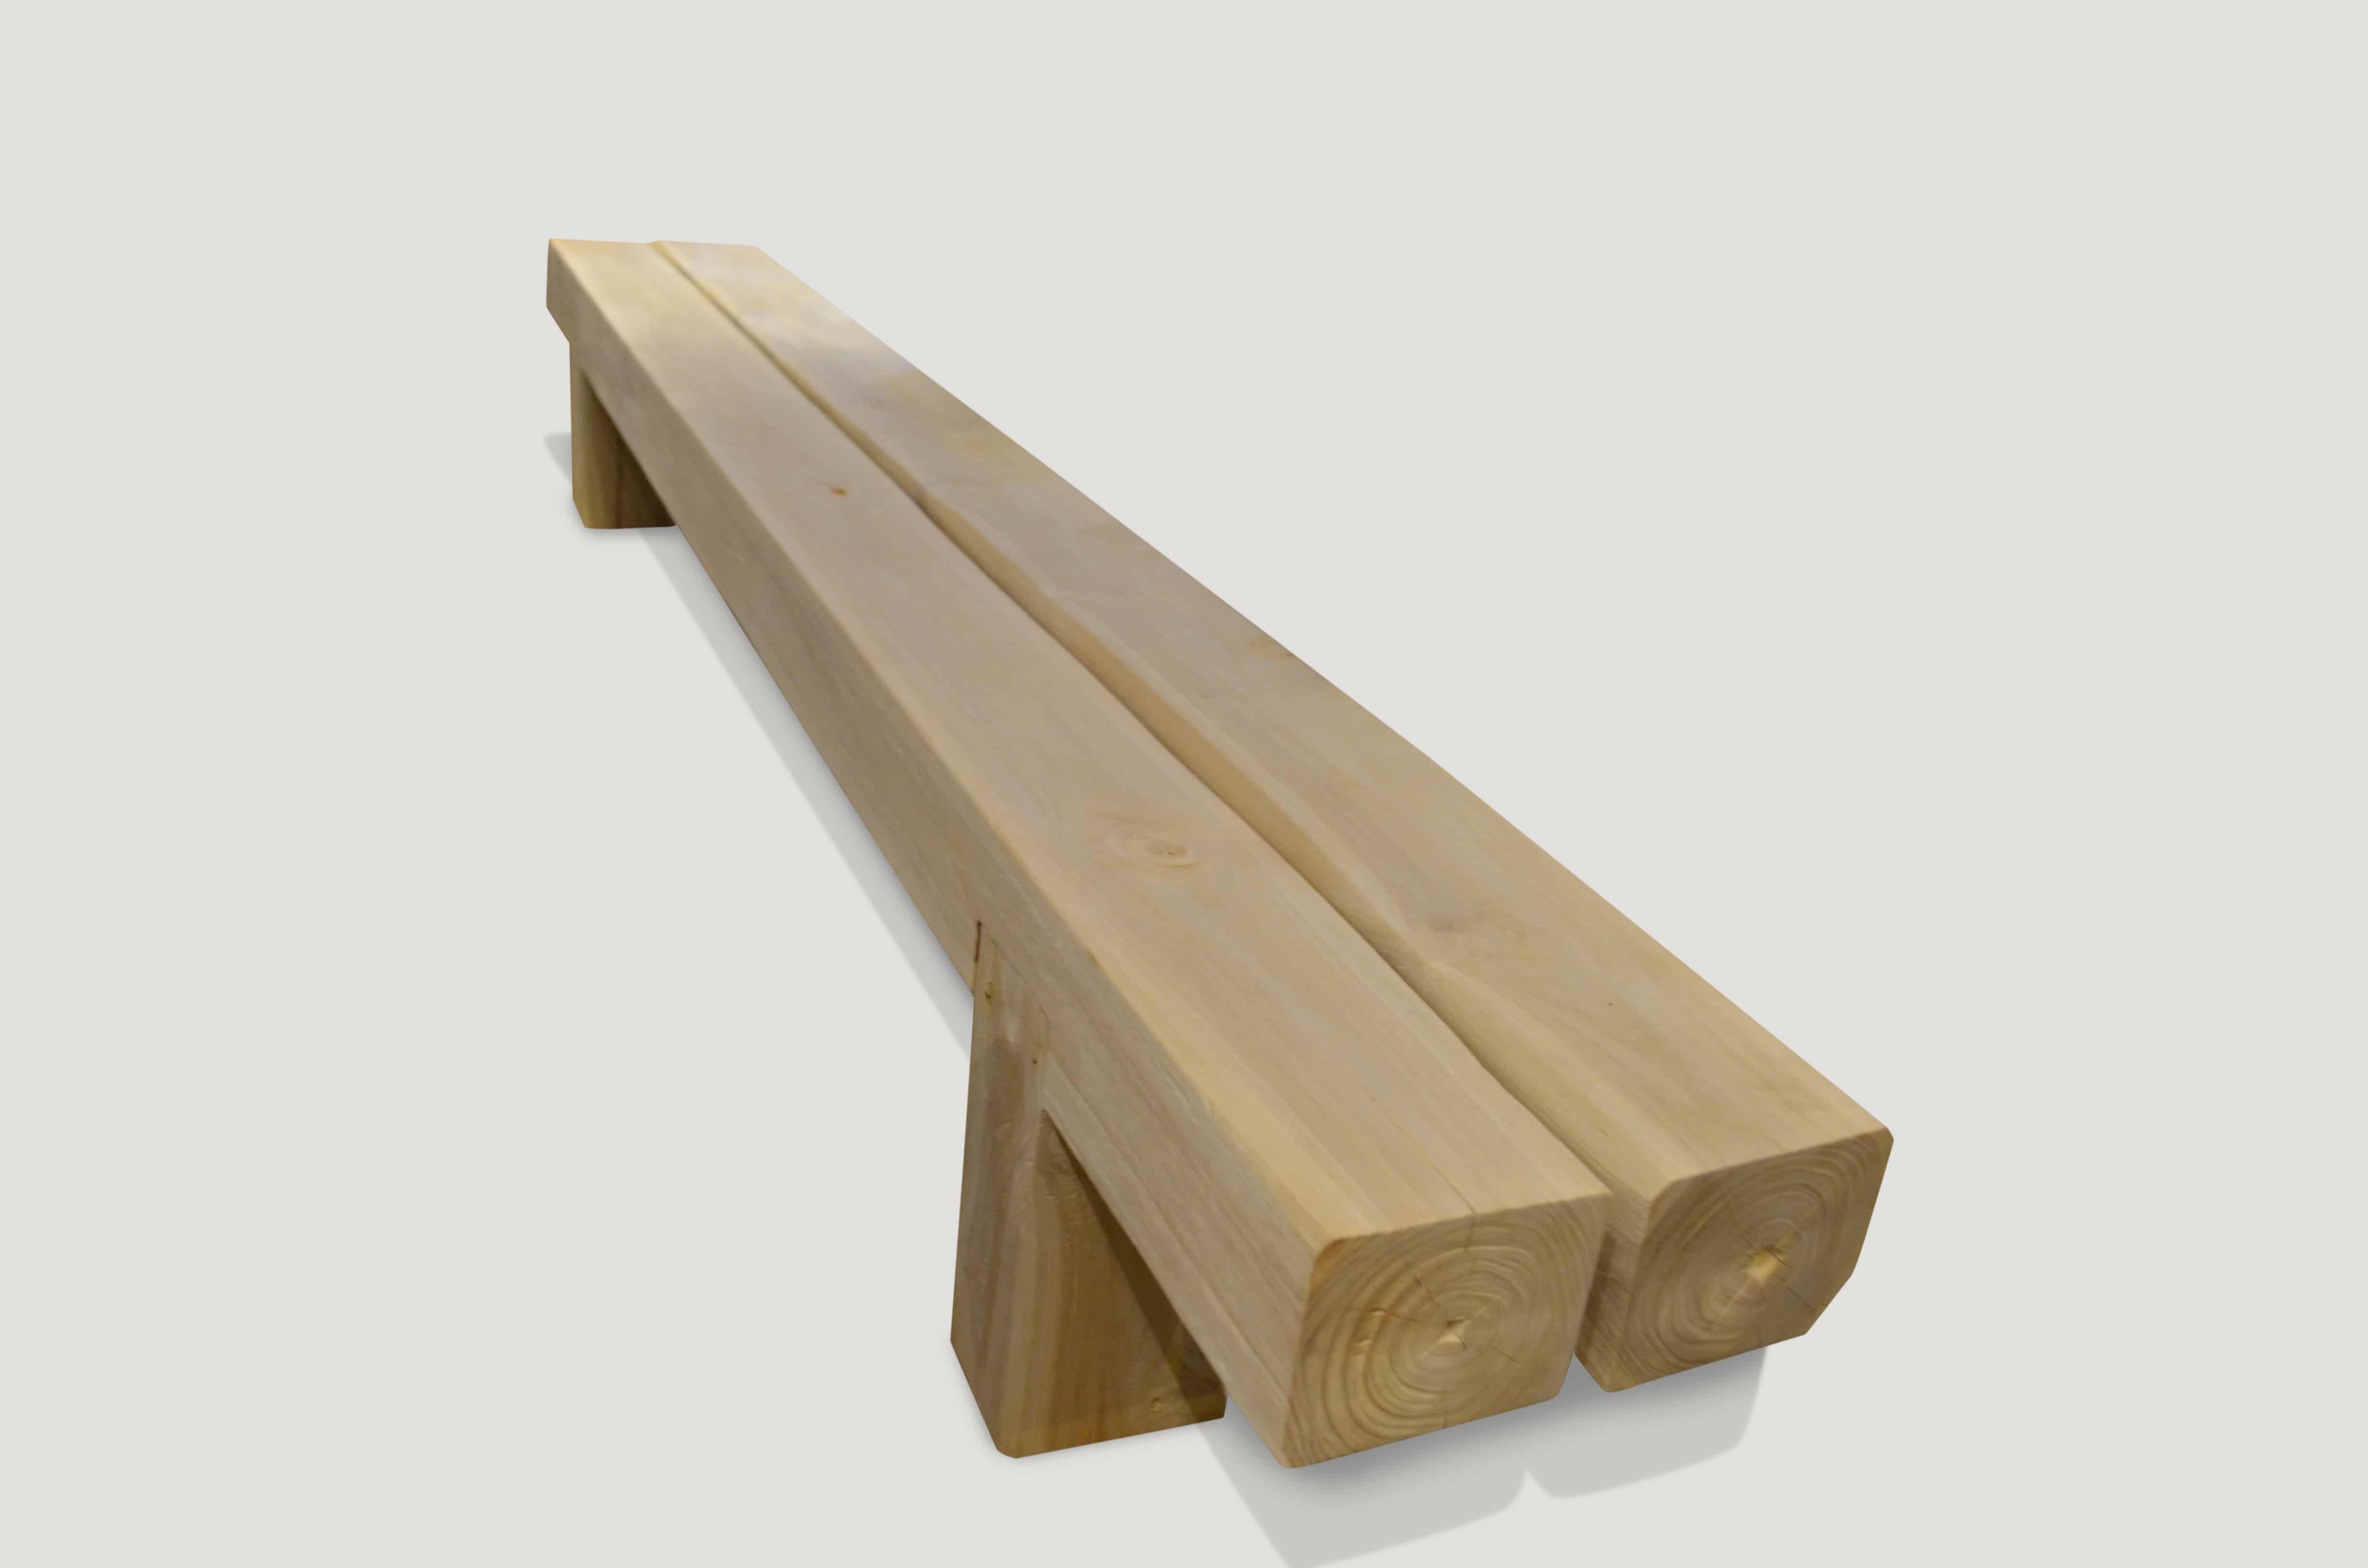 st barts teak wood log bench